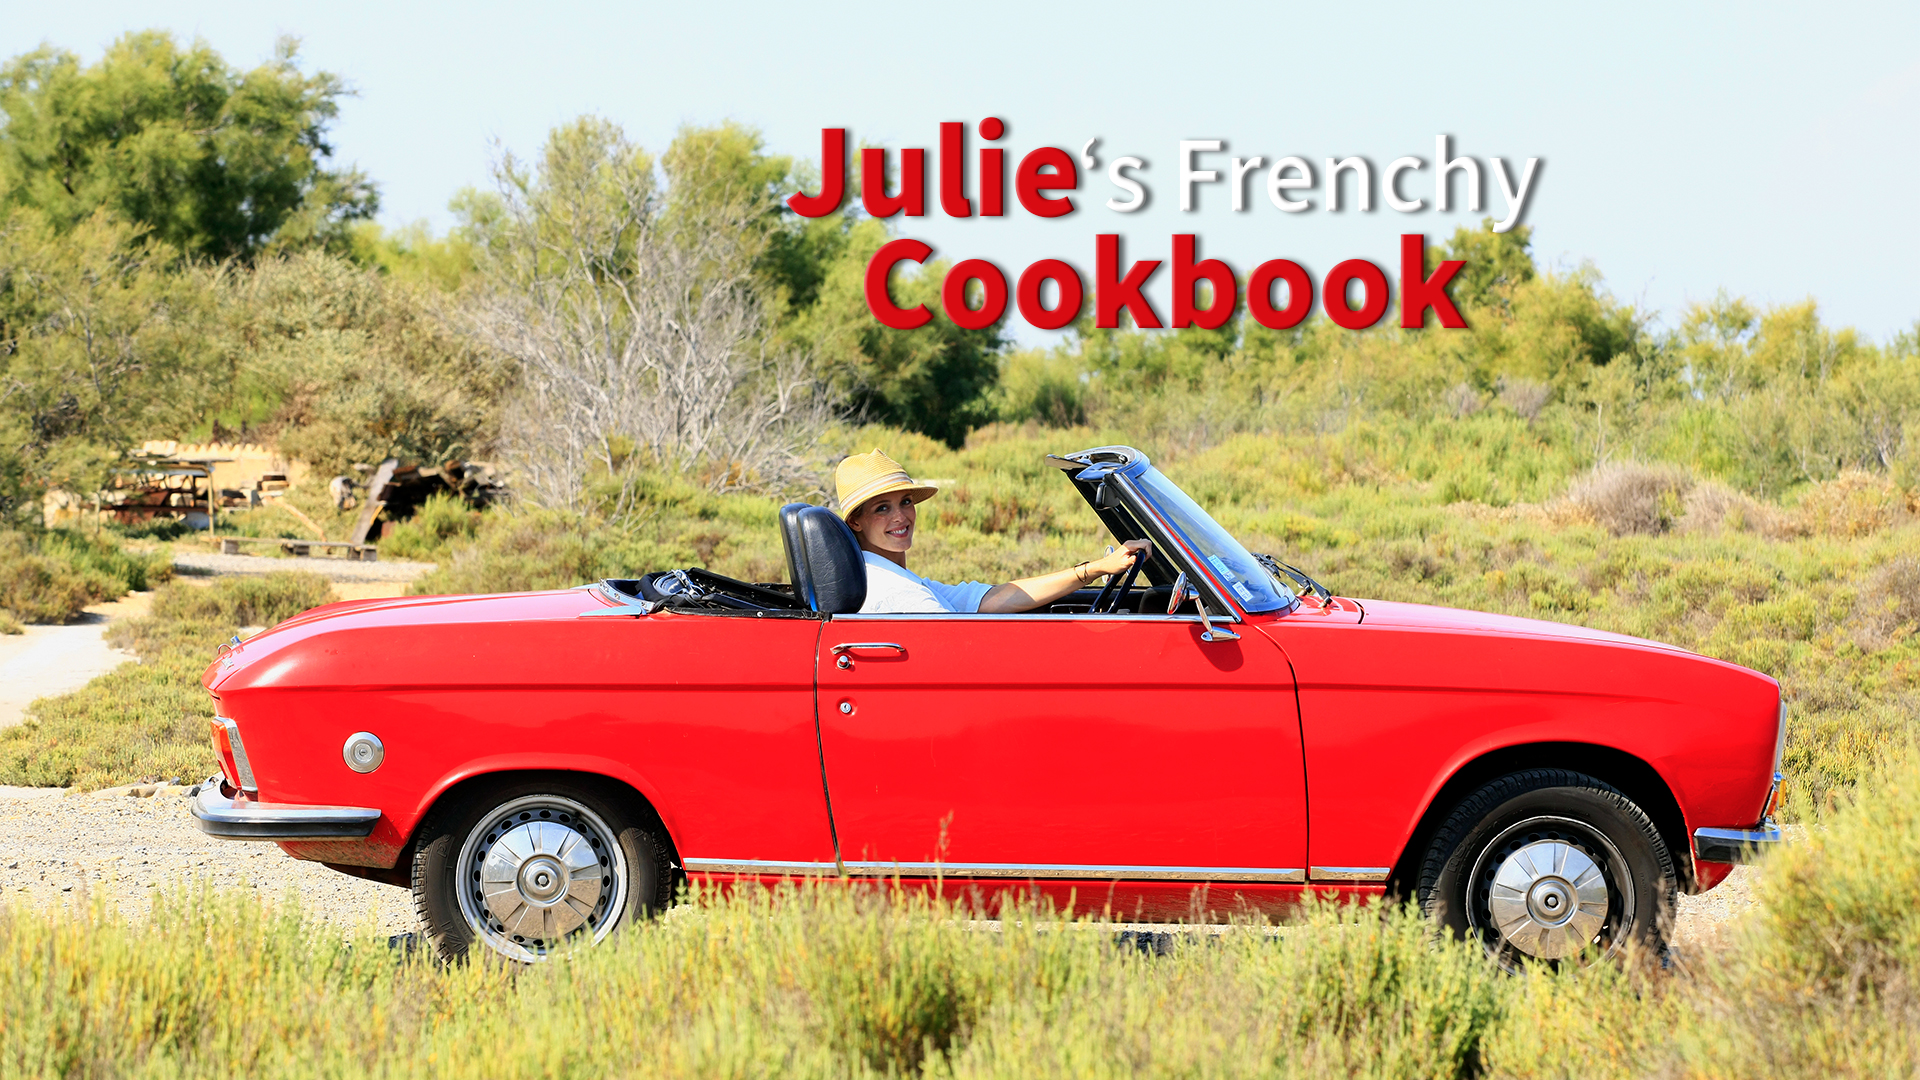 Julie's Frenchy Cookbook